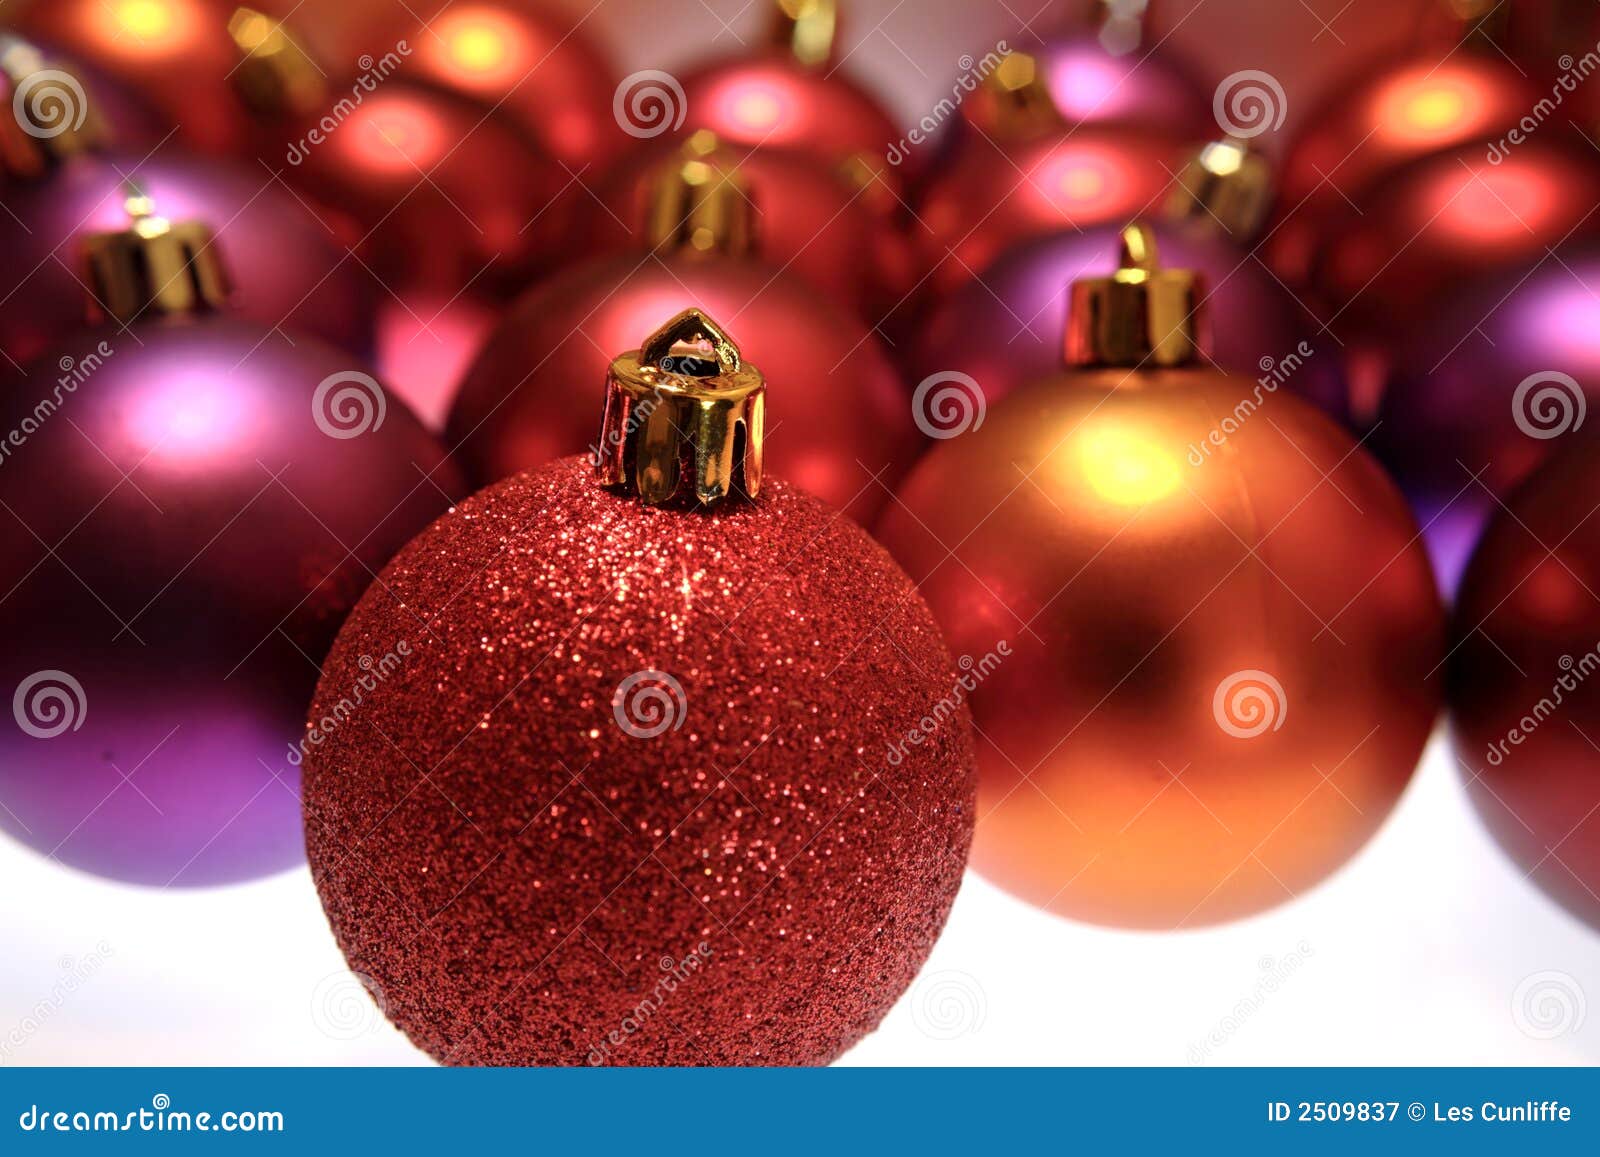 Christmas Bulbs stock image. Image of shot, macro, round - 2509837